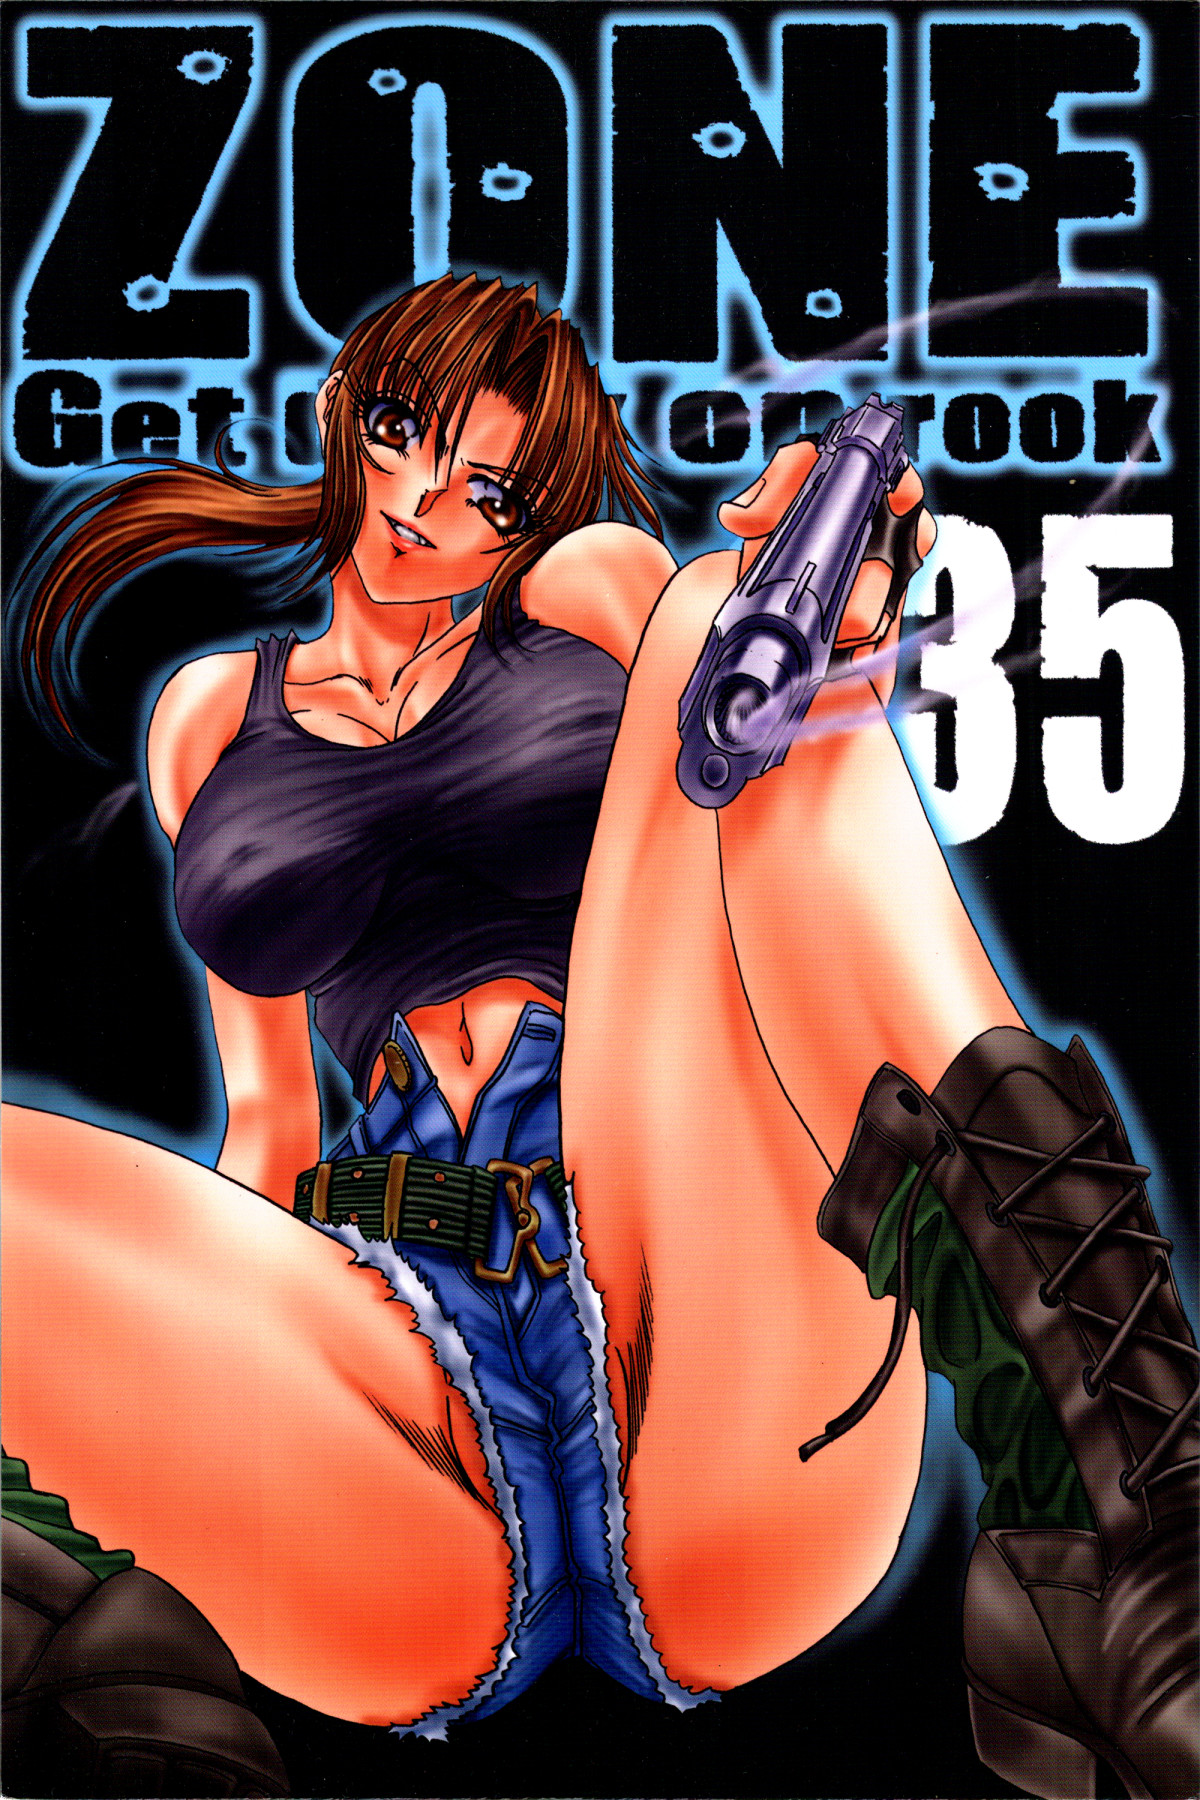 Hentai Manga Comic-ZONE 35 Get Drunk On rook-v22m-Read-1